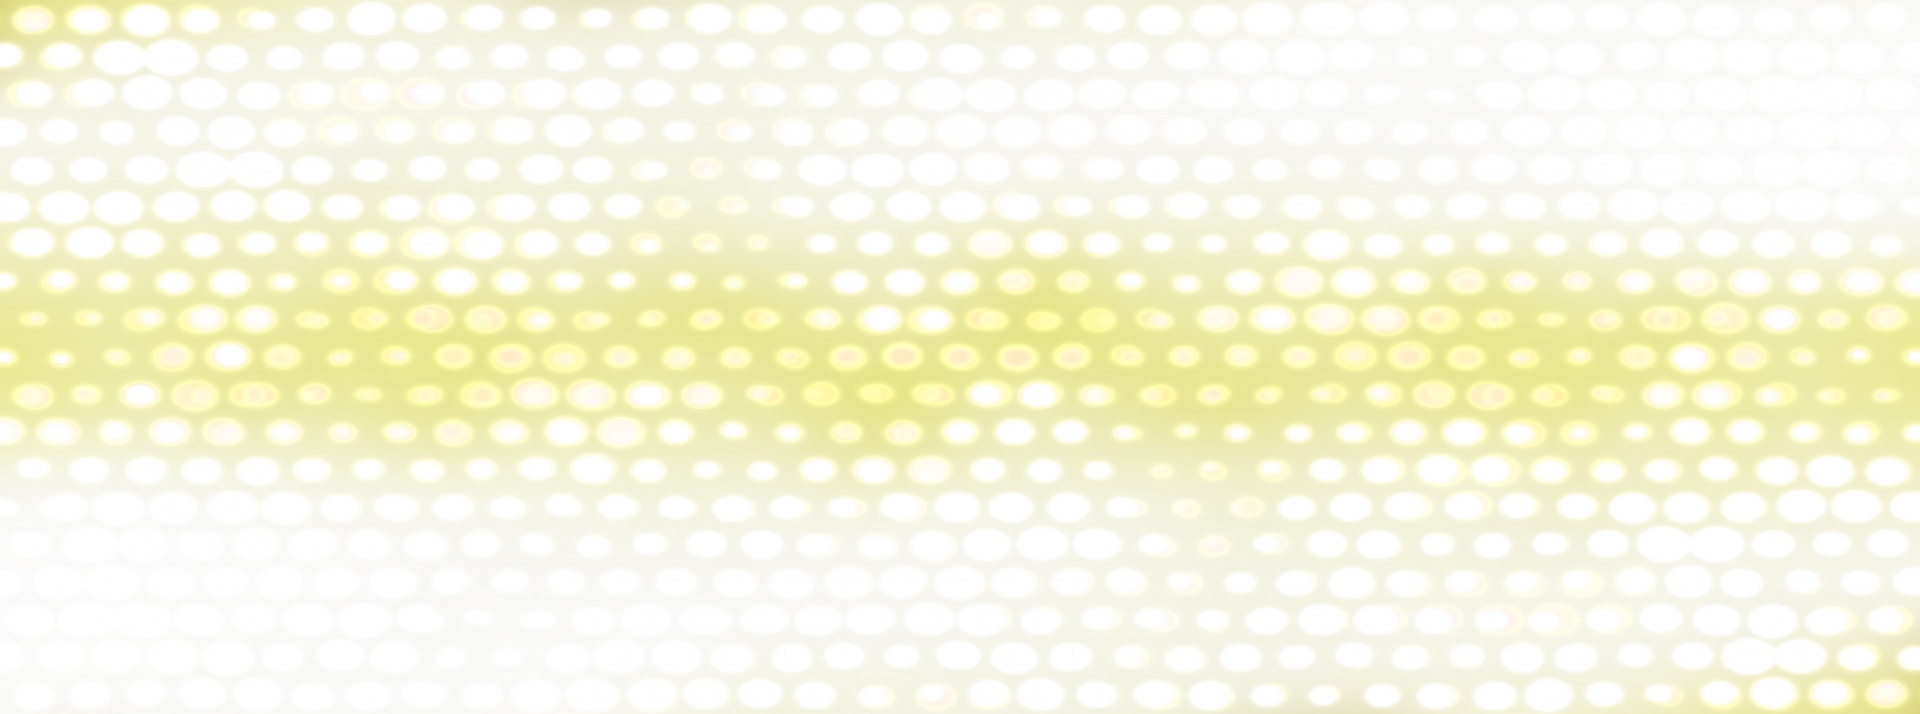 dots rectangle yellow free photo